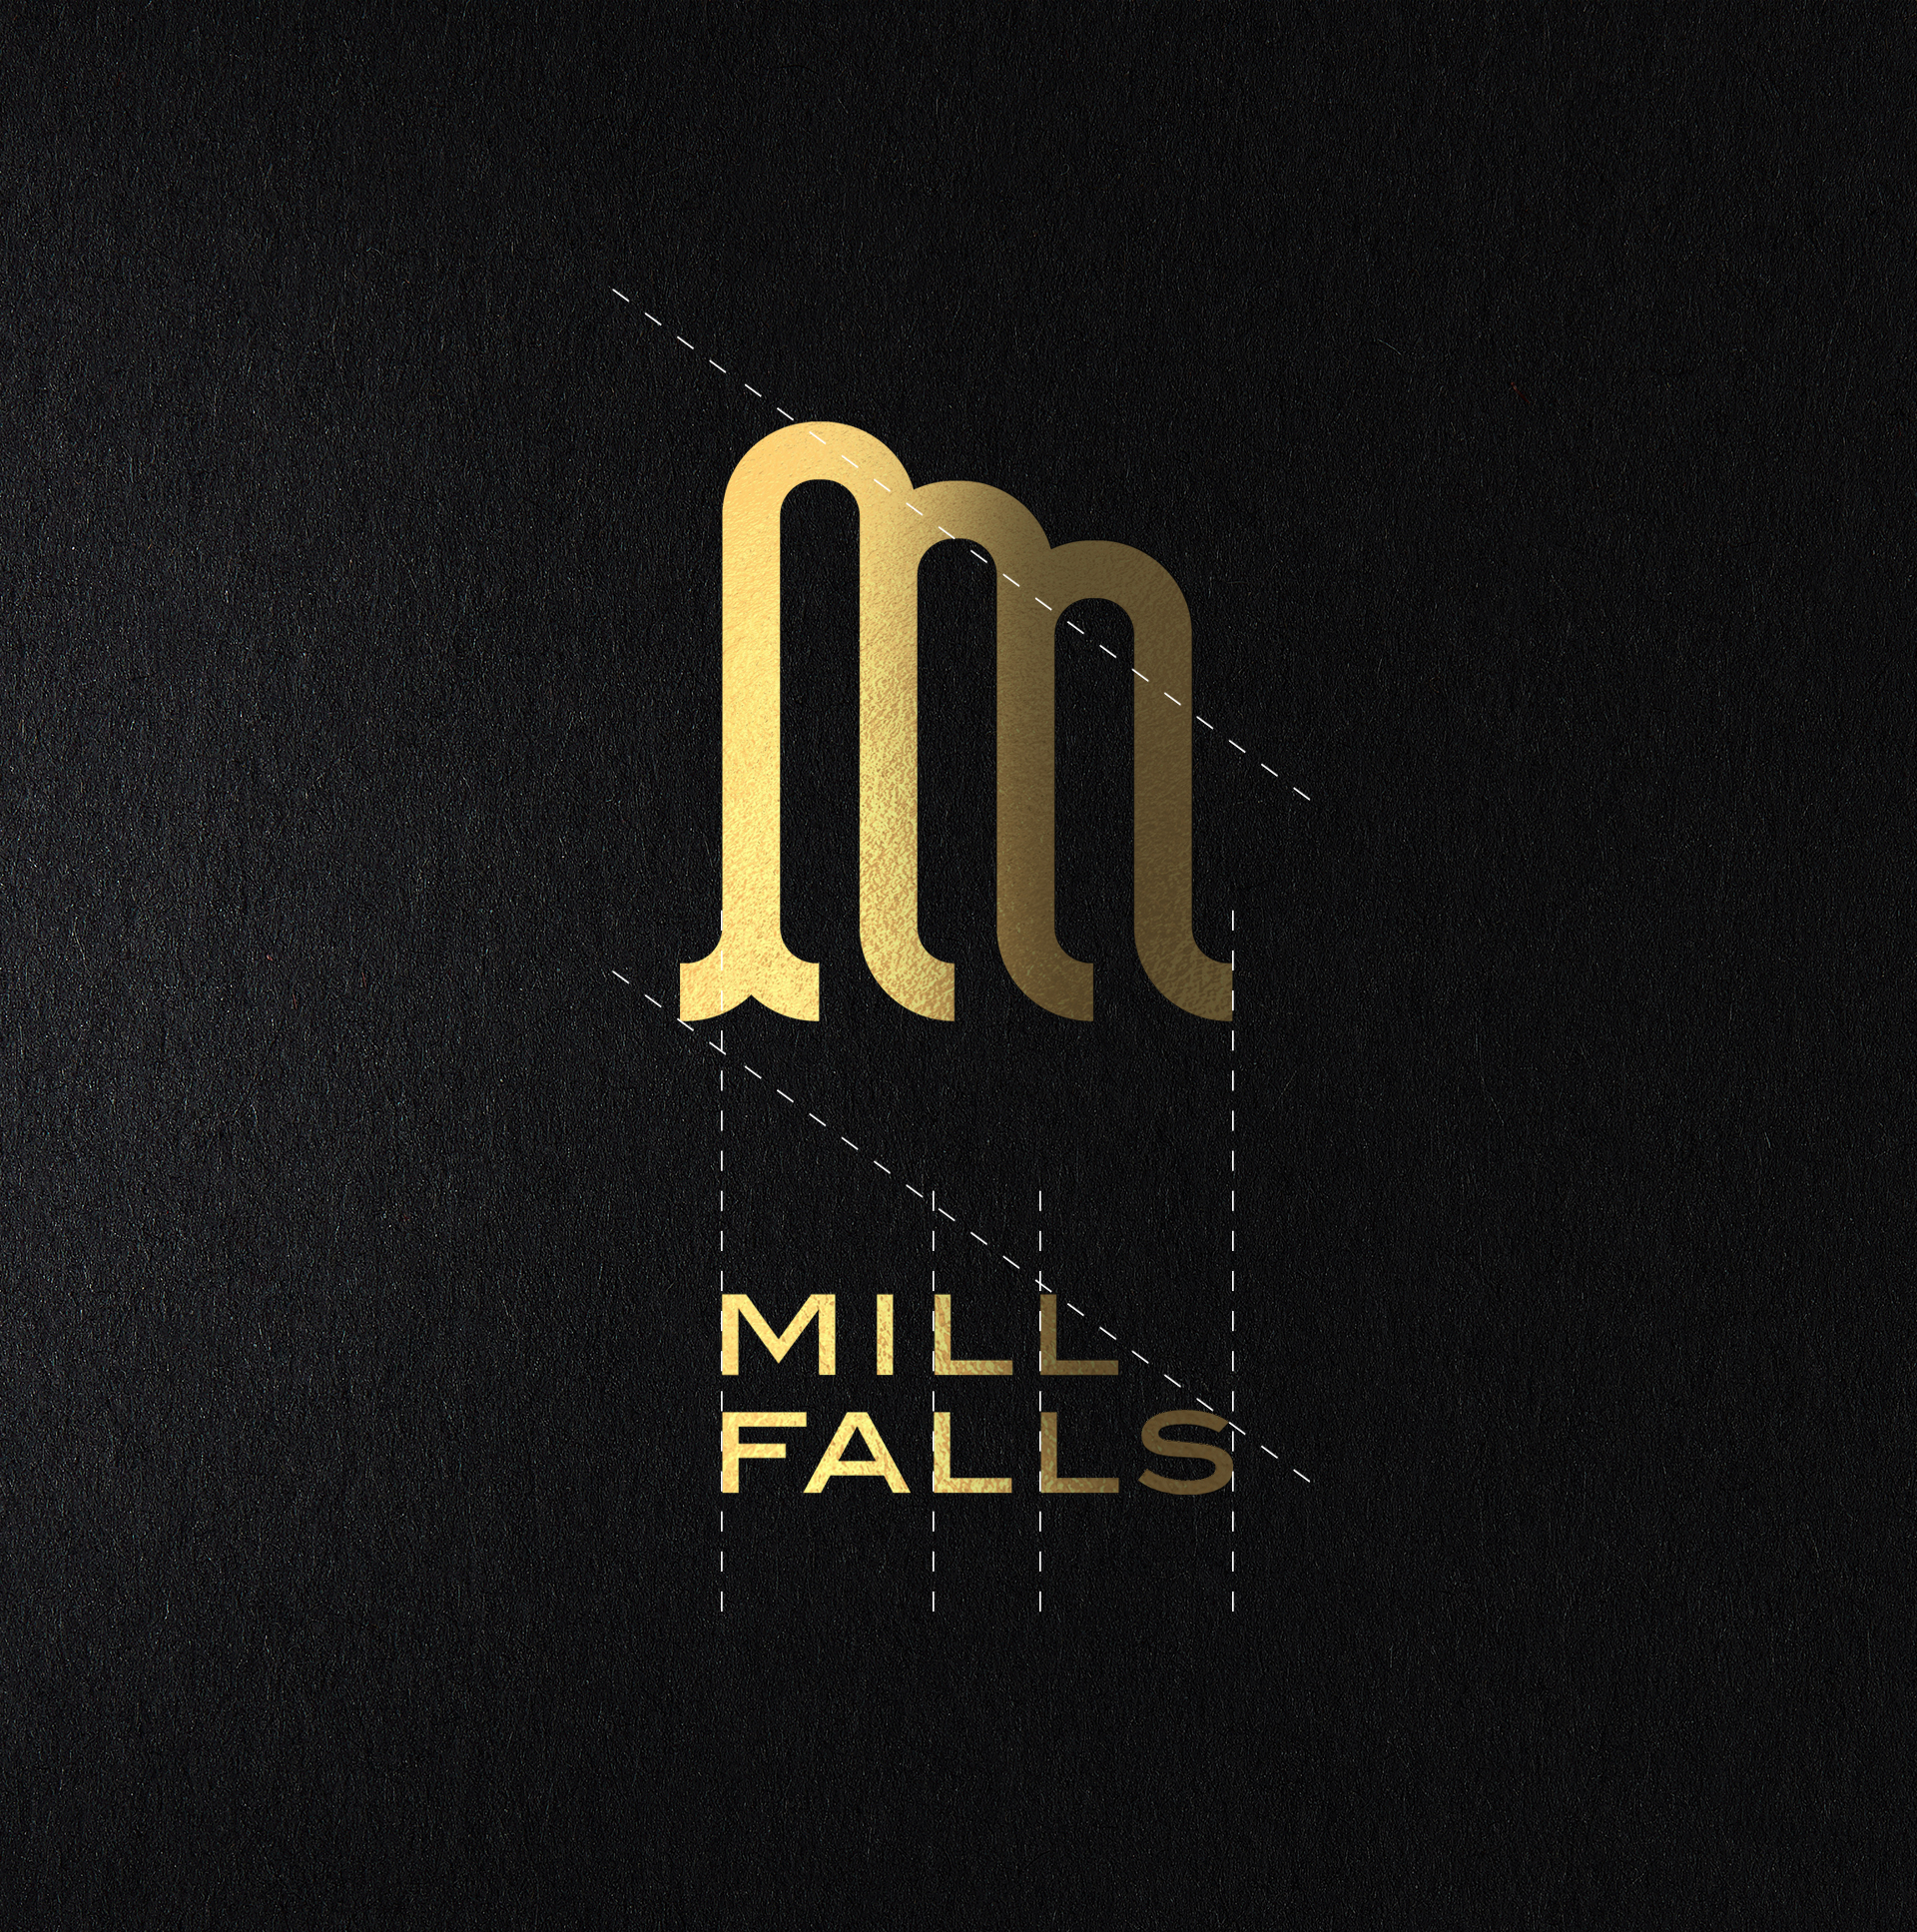 Mill Falls logo showing draughting lines